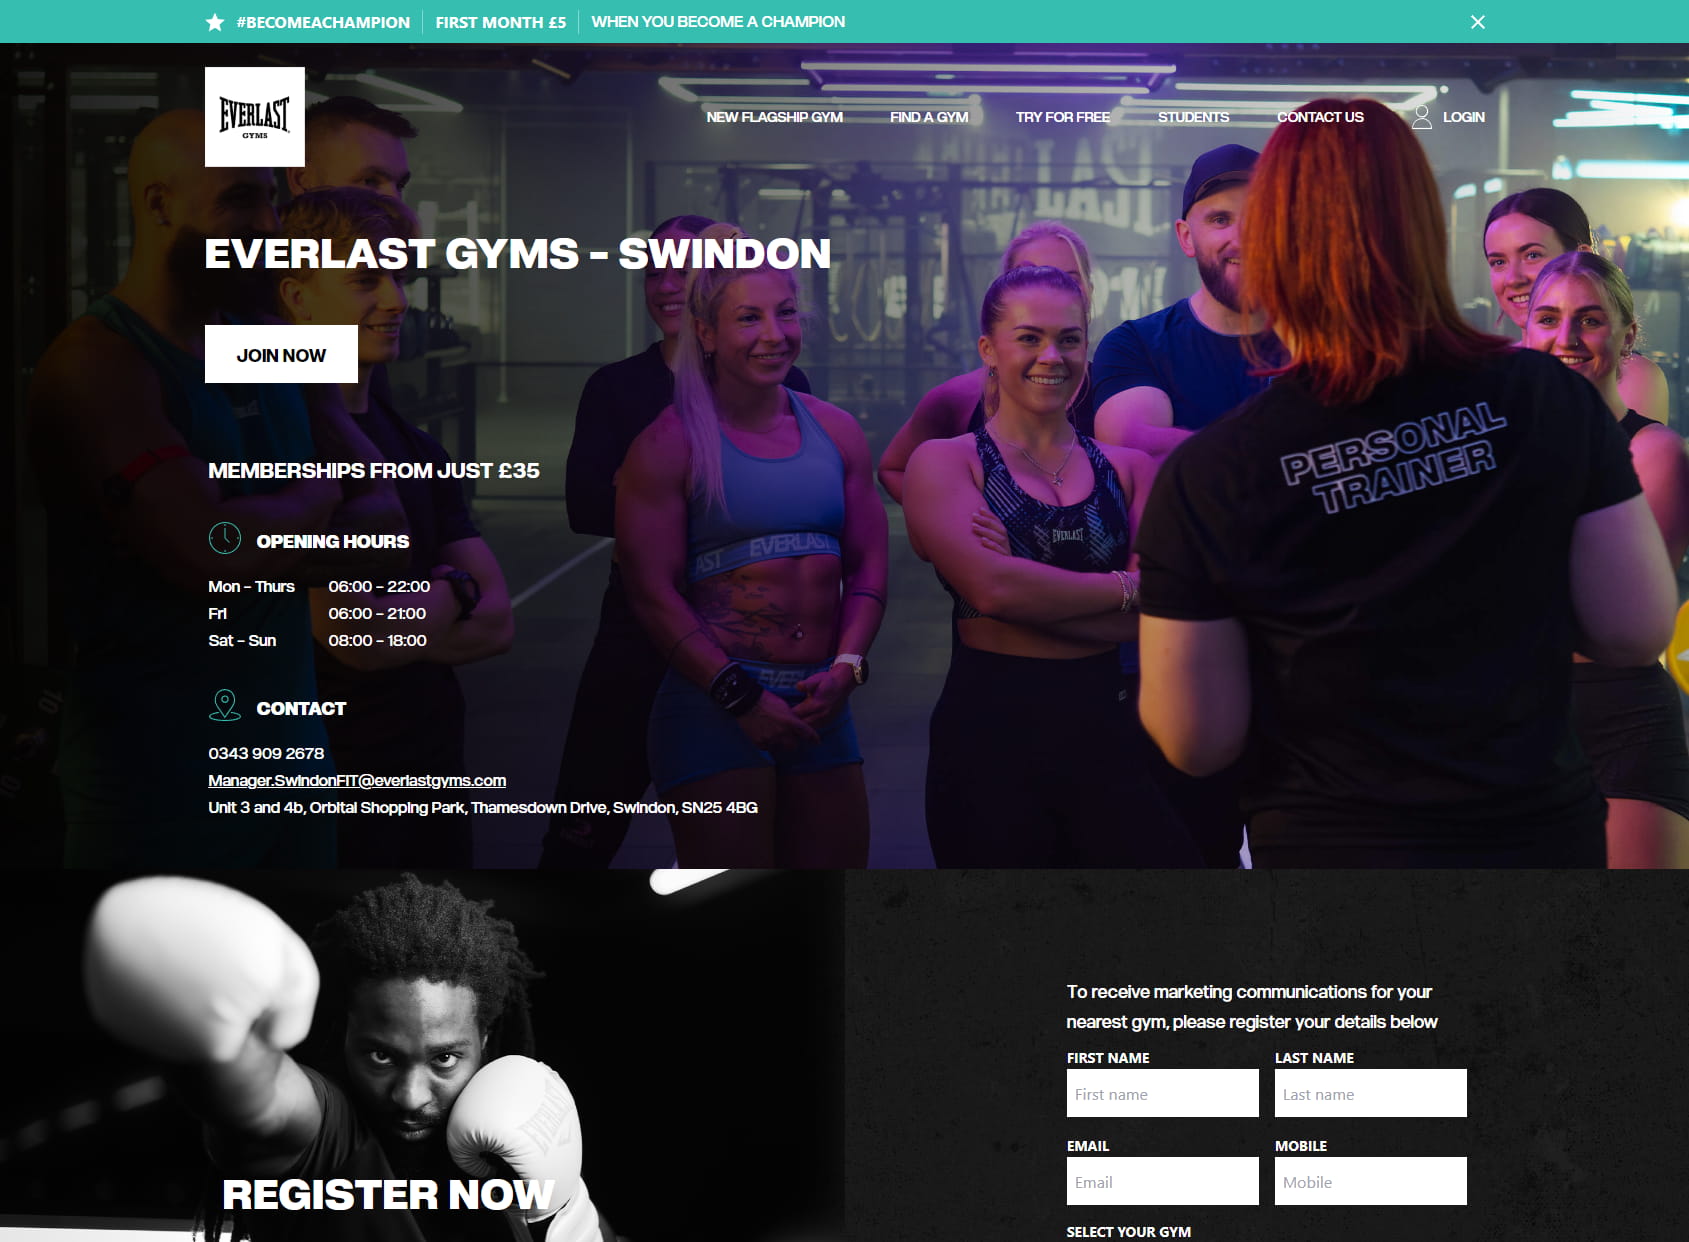 Everlast Gyms - Swindon